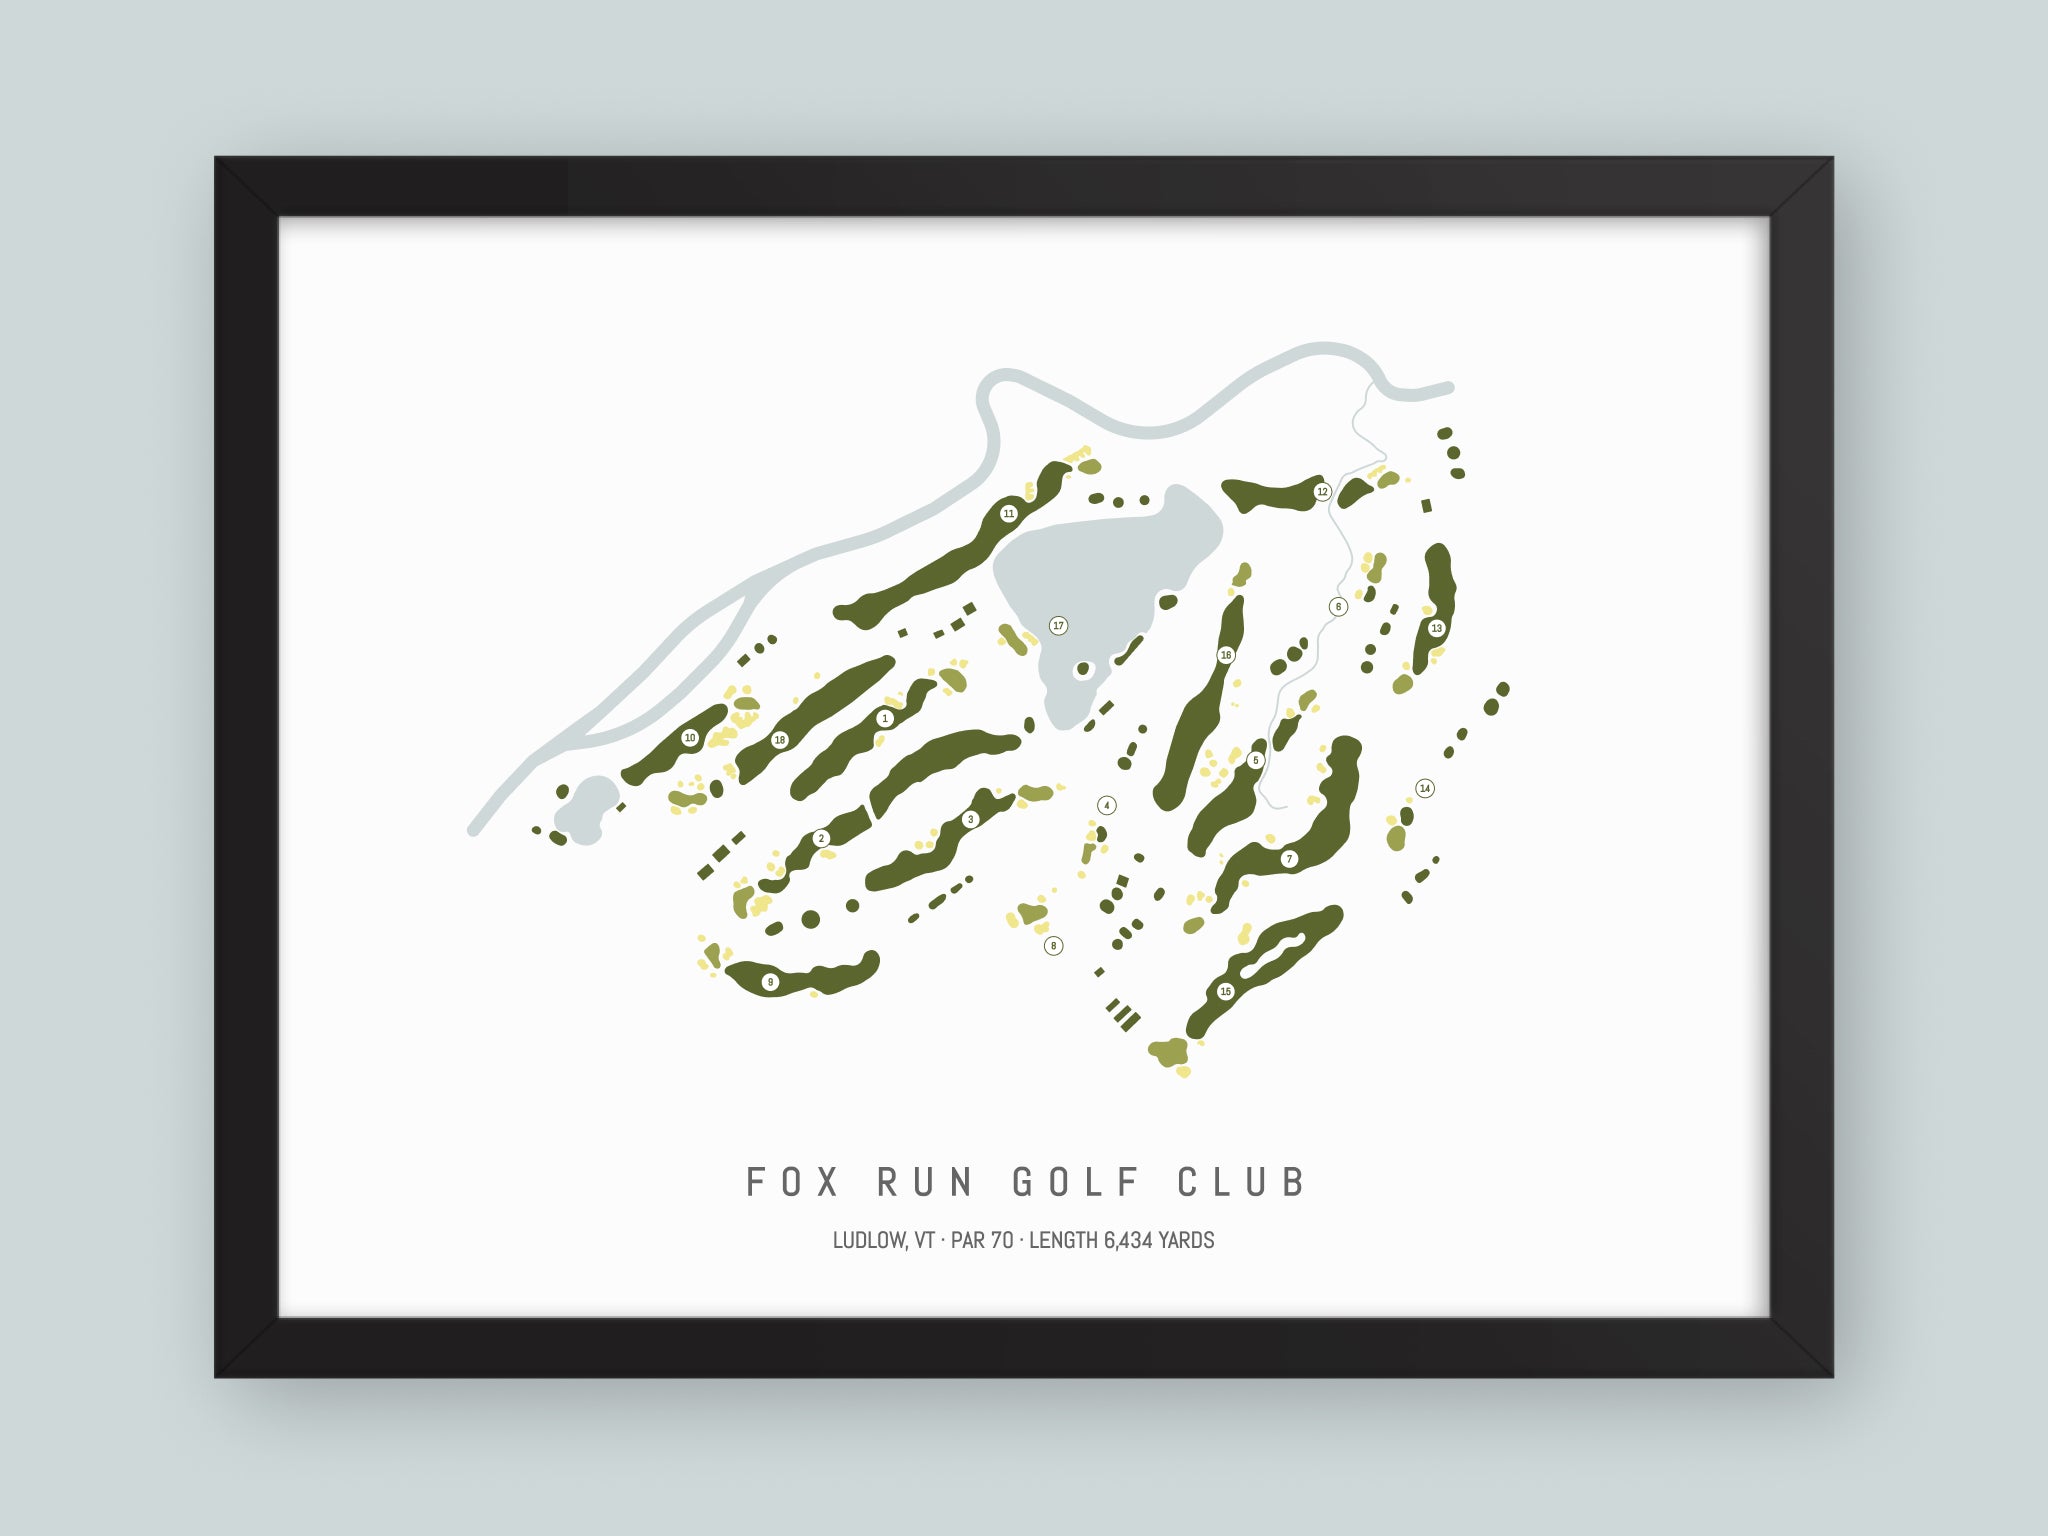 Fox-Run-Golf-Club-VT--Black-Frame-24x18-With-Hole-Numbers